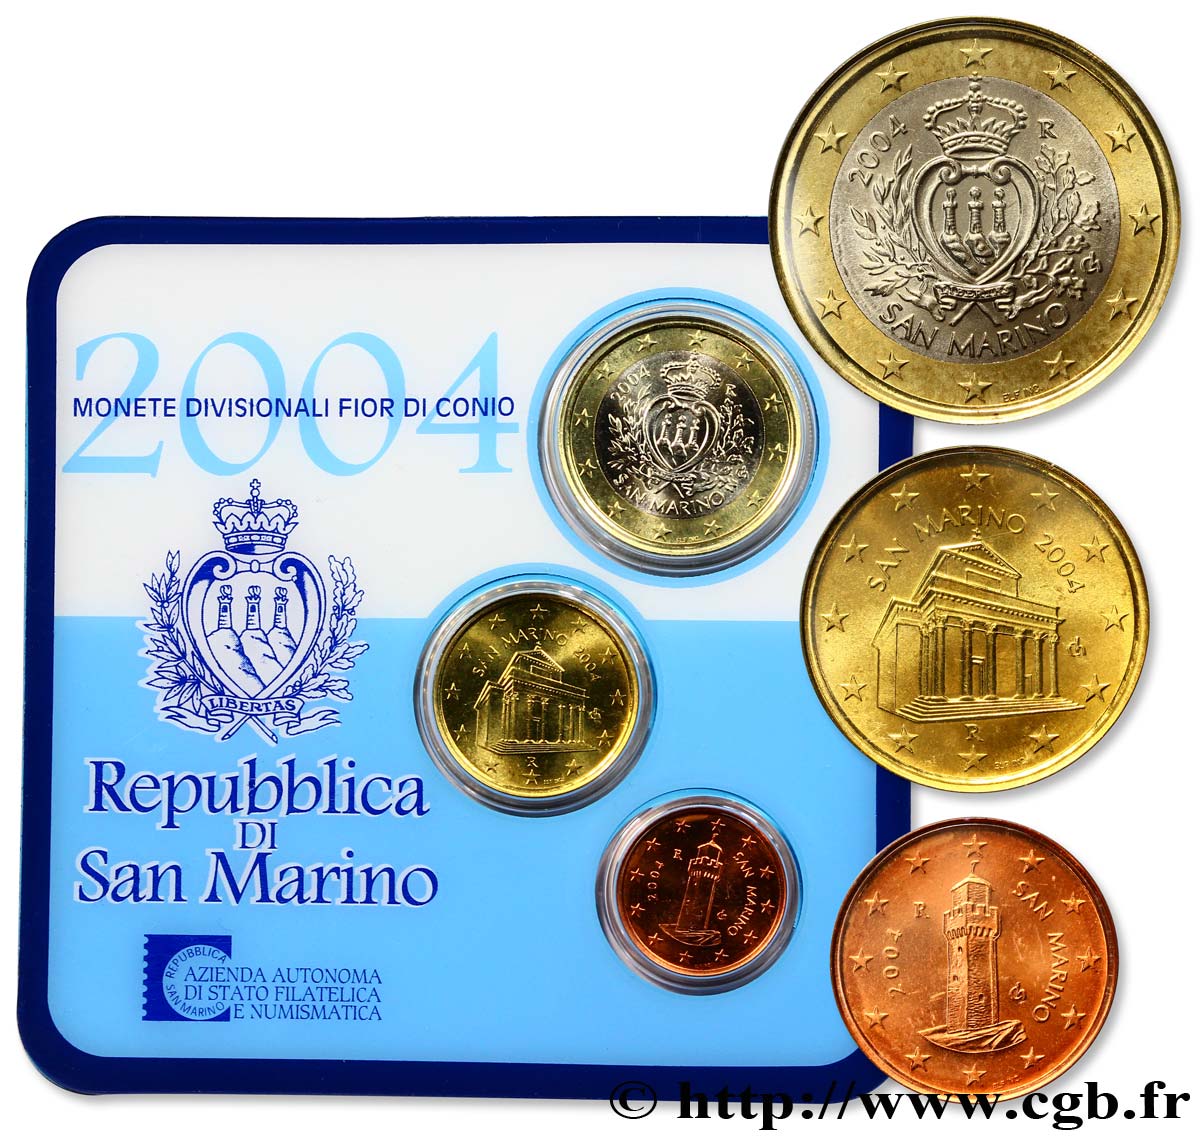 SAN MARINO MINI-SÉRIE Euro BRILLANT UNIVERSEL 1 Cent, 10 Cent et 1 Euro  2004